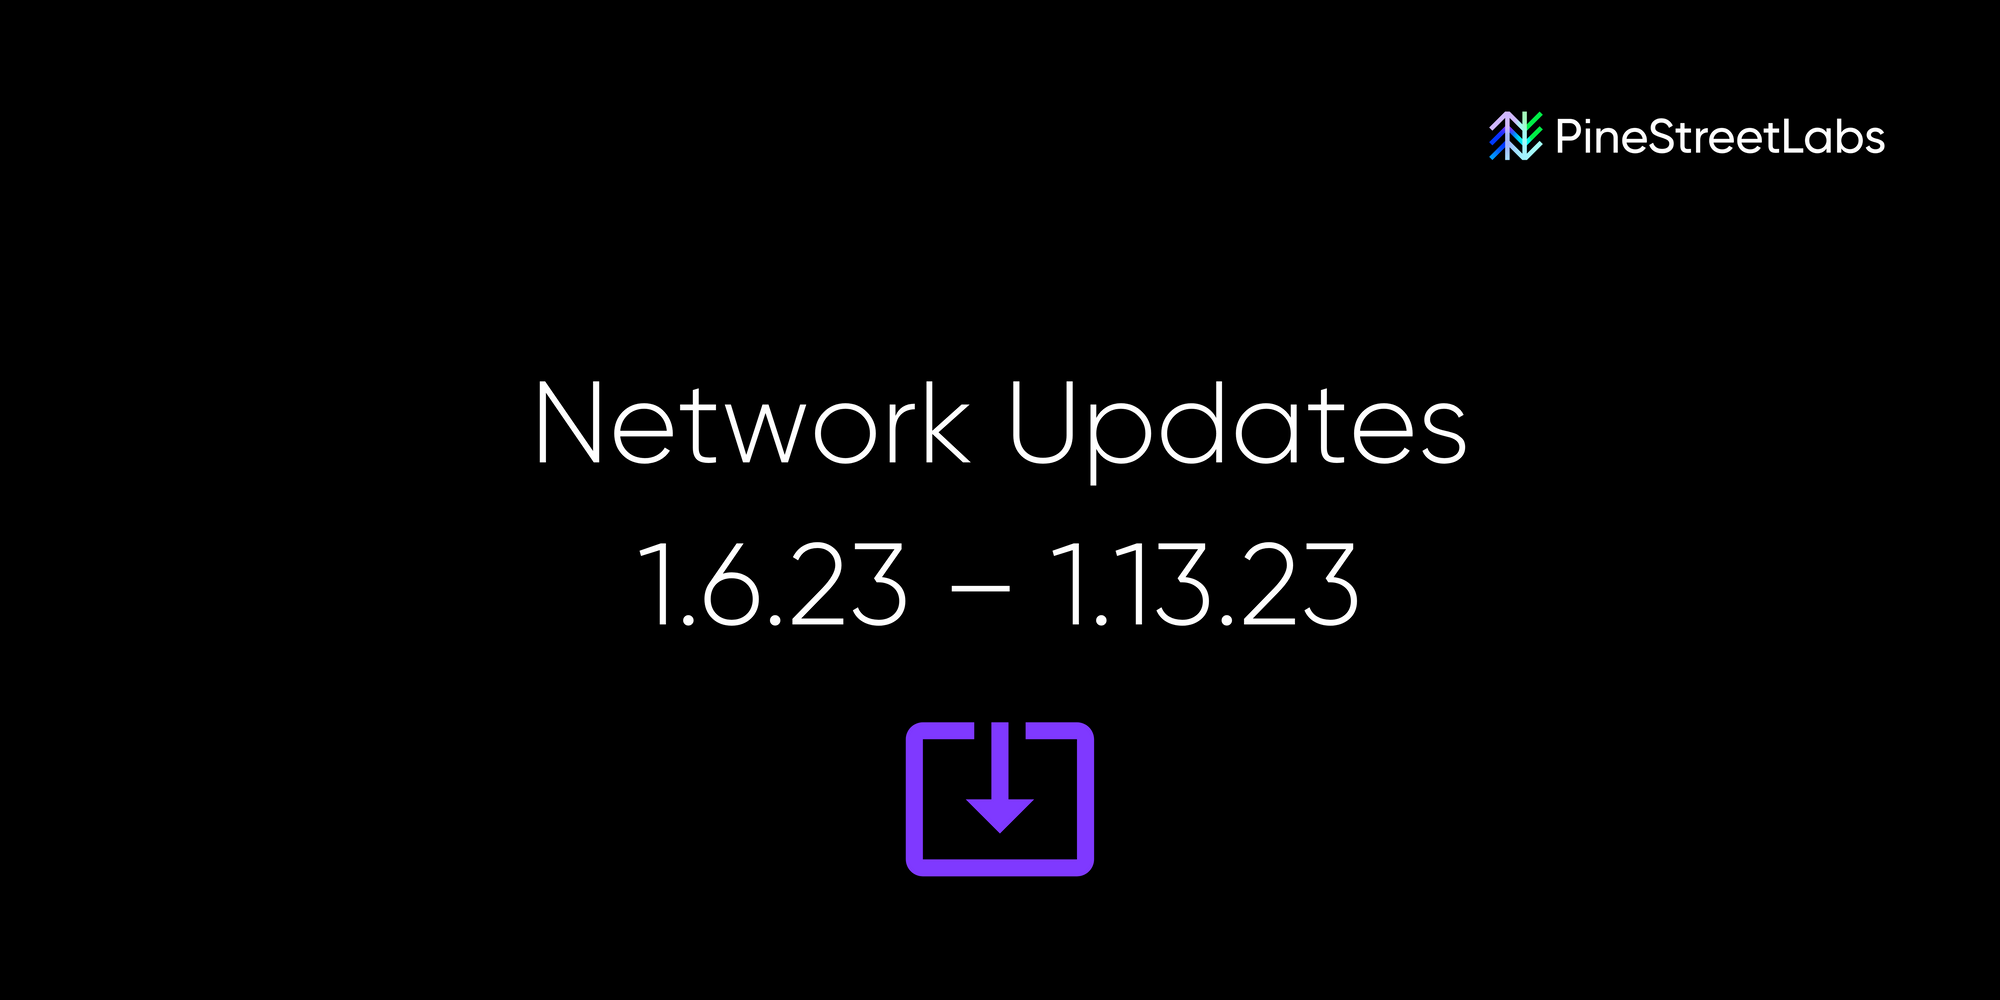 Network Update Highlights 1.13.23